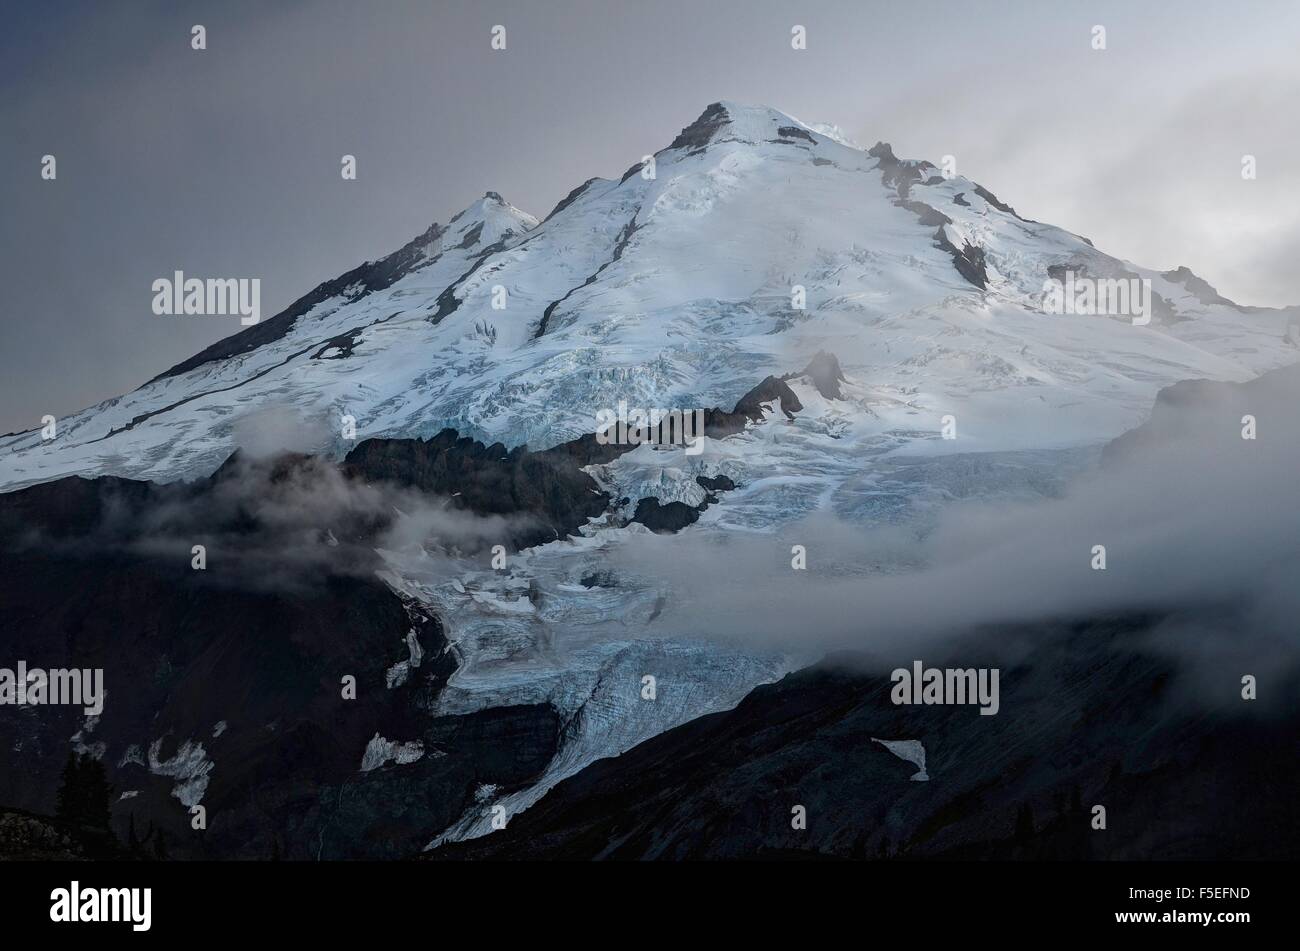 Snowcapped peak of mount baker, Washington, USA Stock Photo